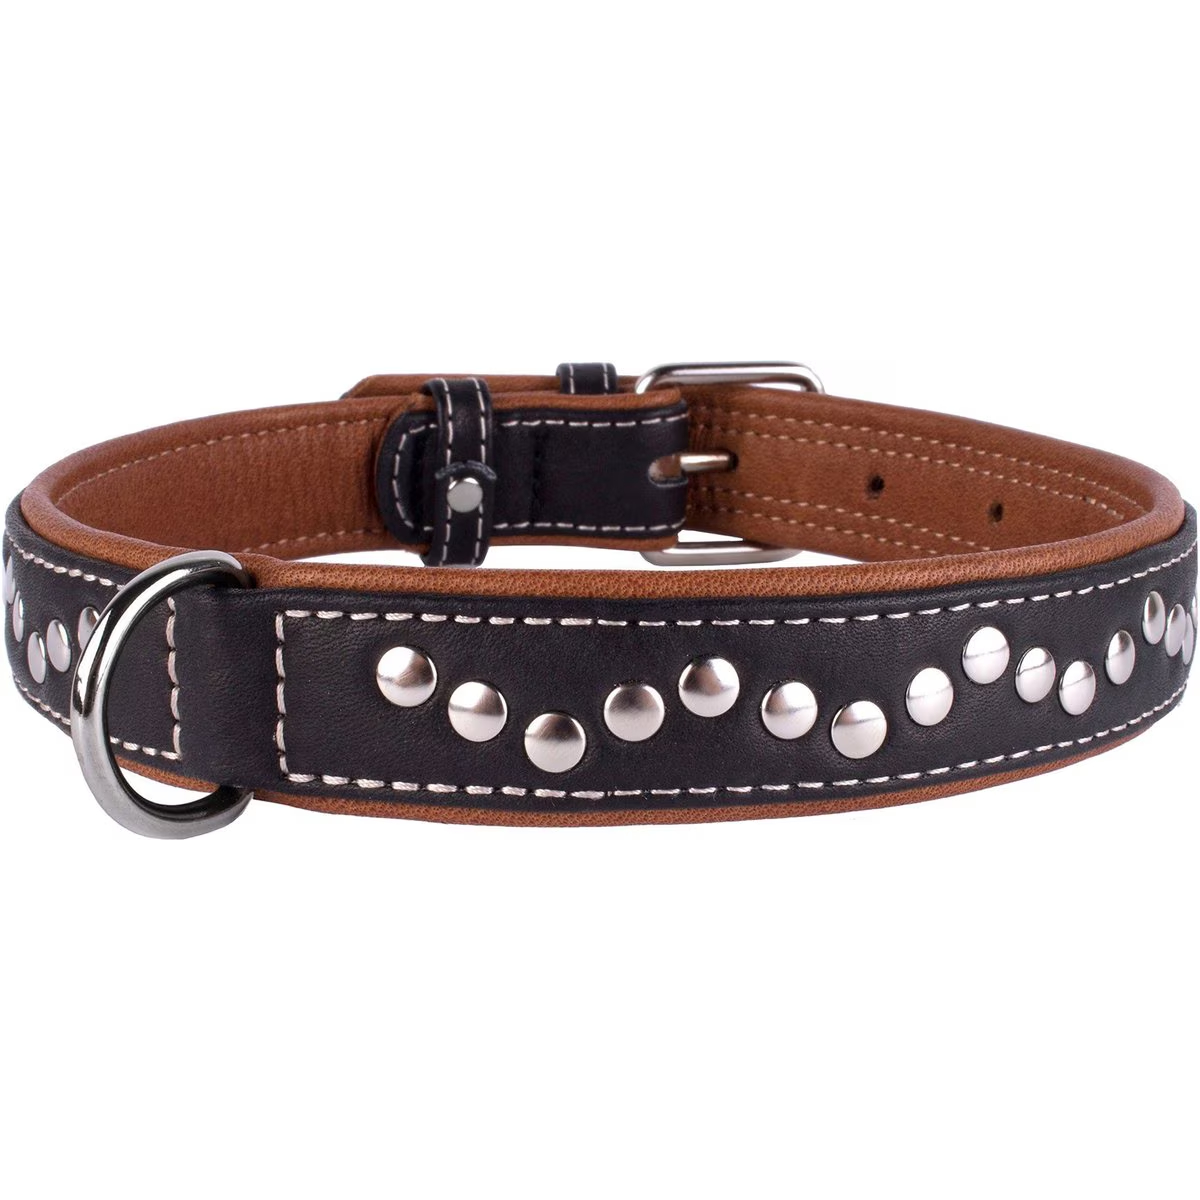 CollarDirect Handmade Studded Leather Dog Collar